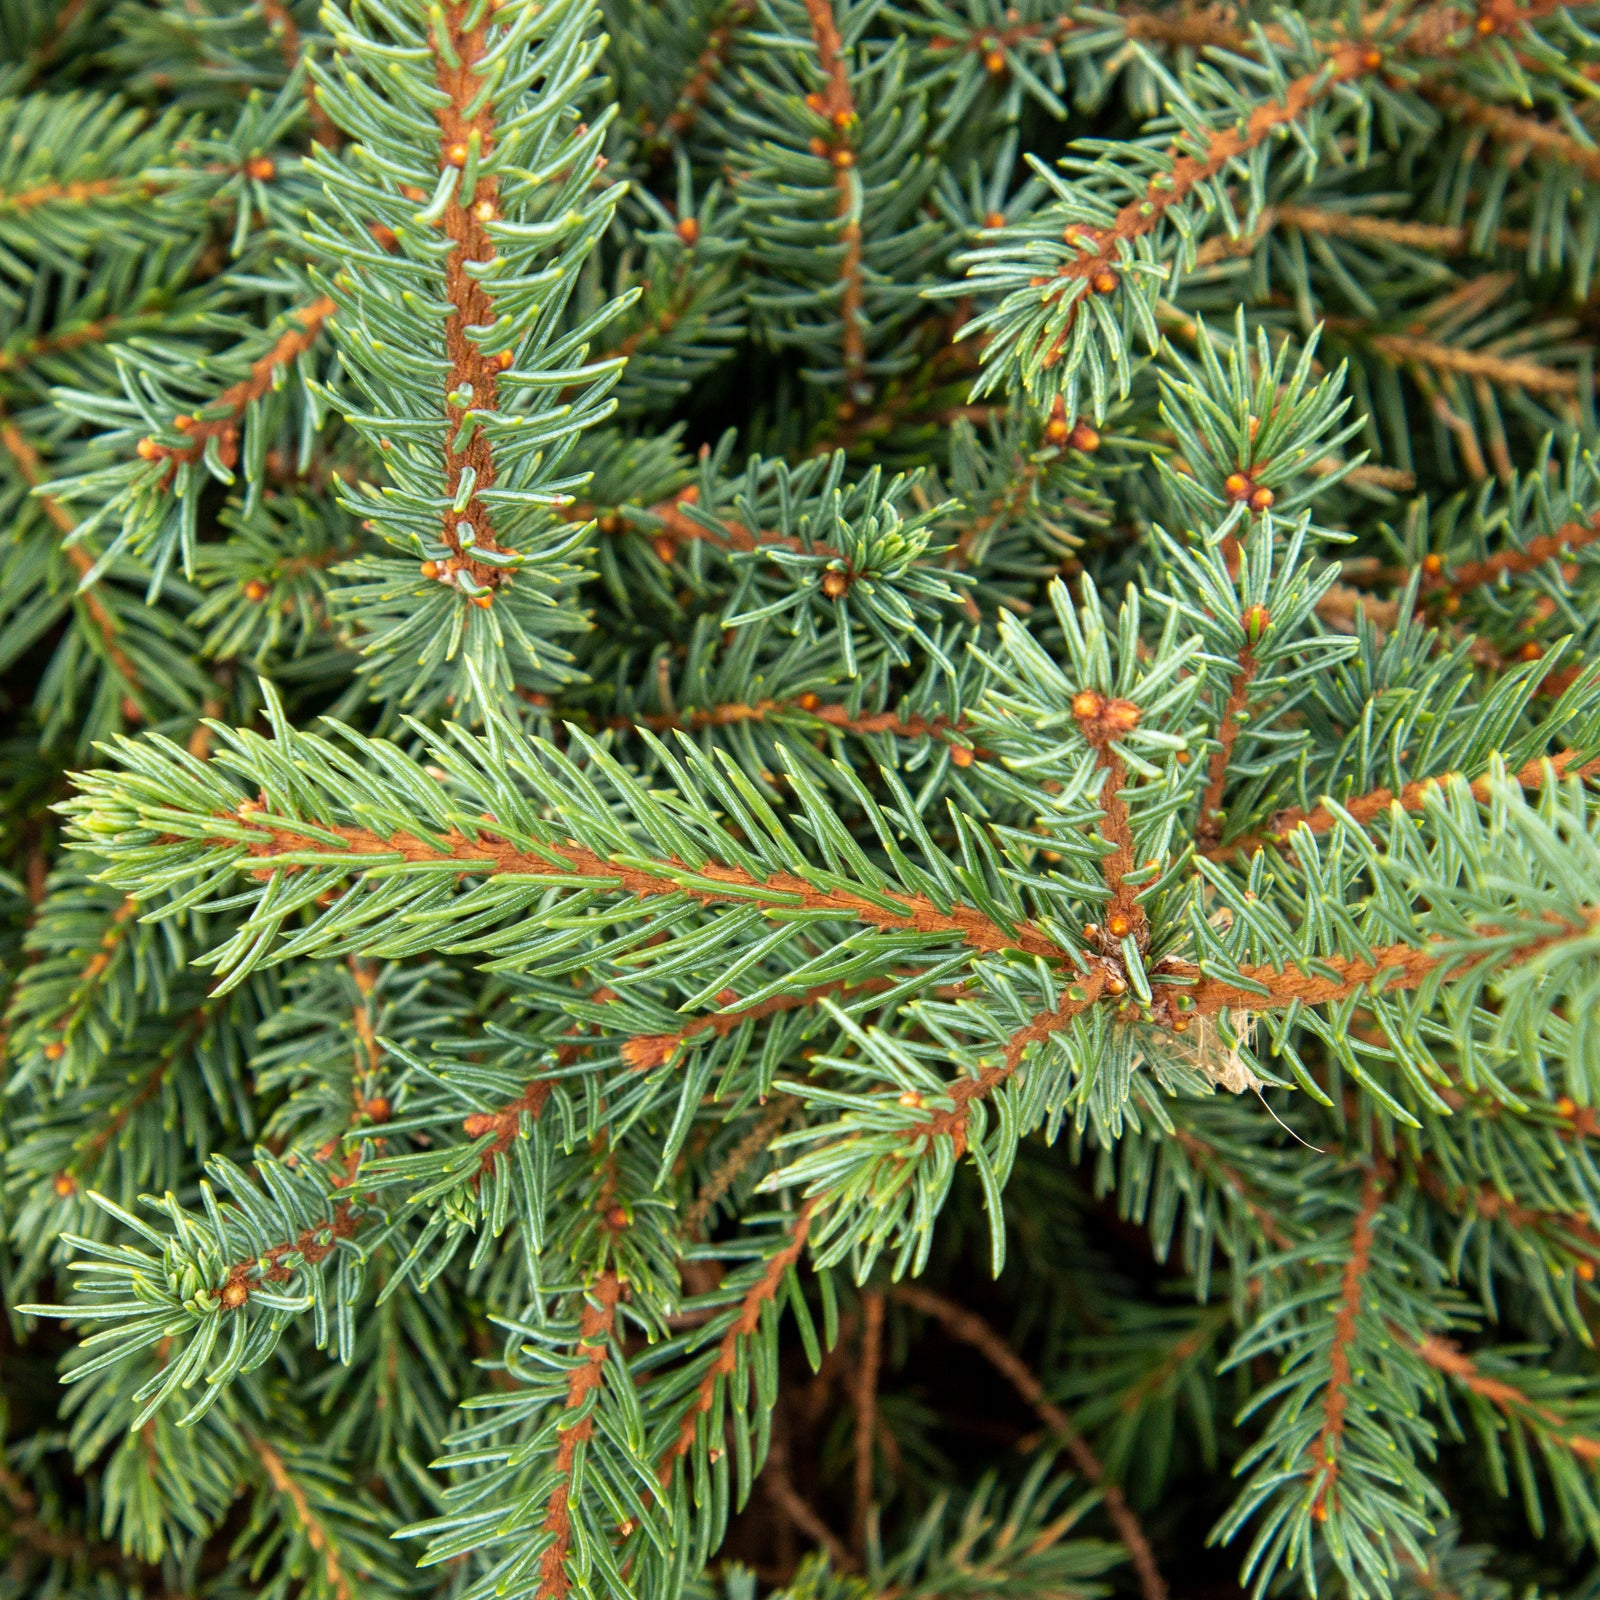 Picea mariana Nana - Dwarf black spruce